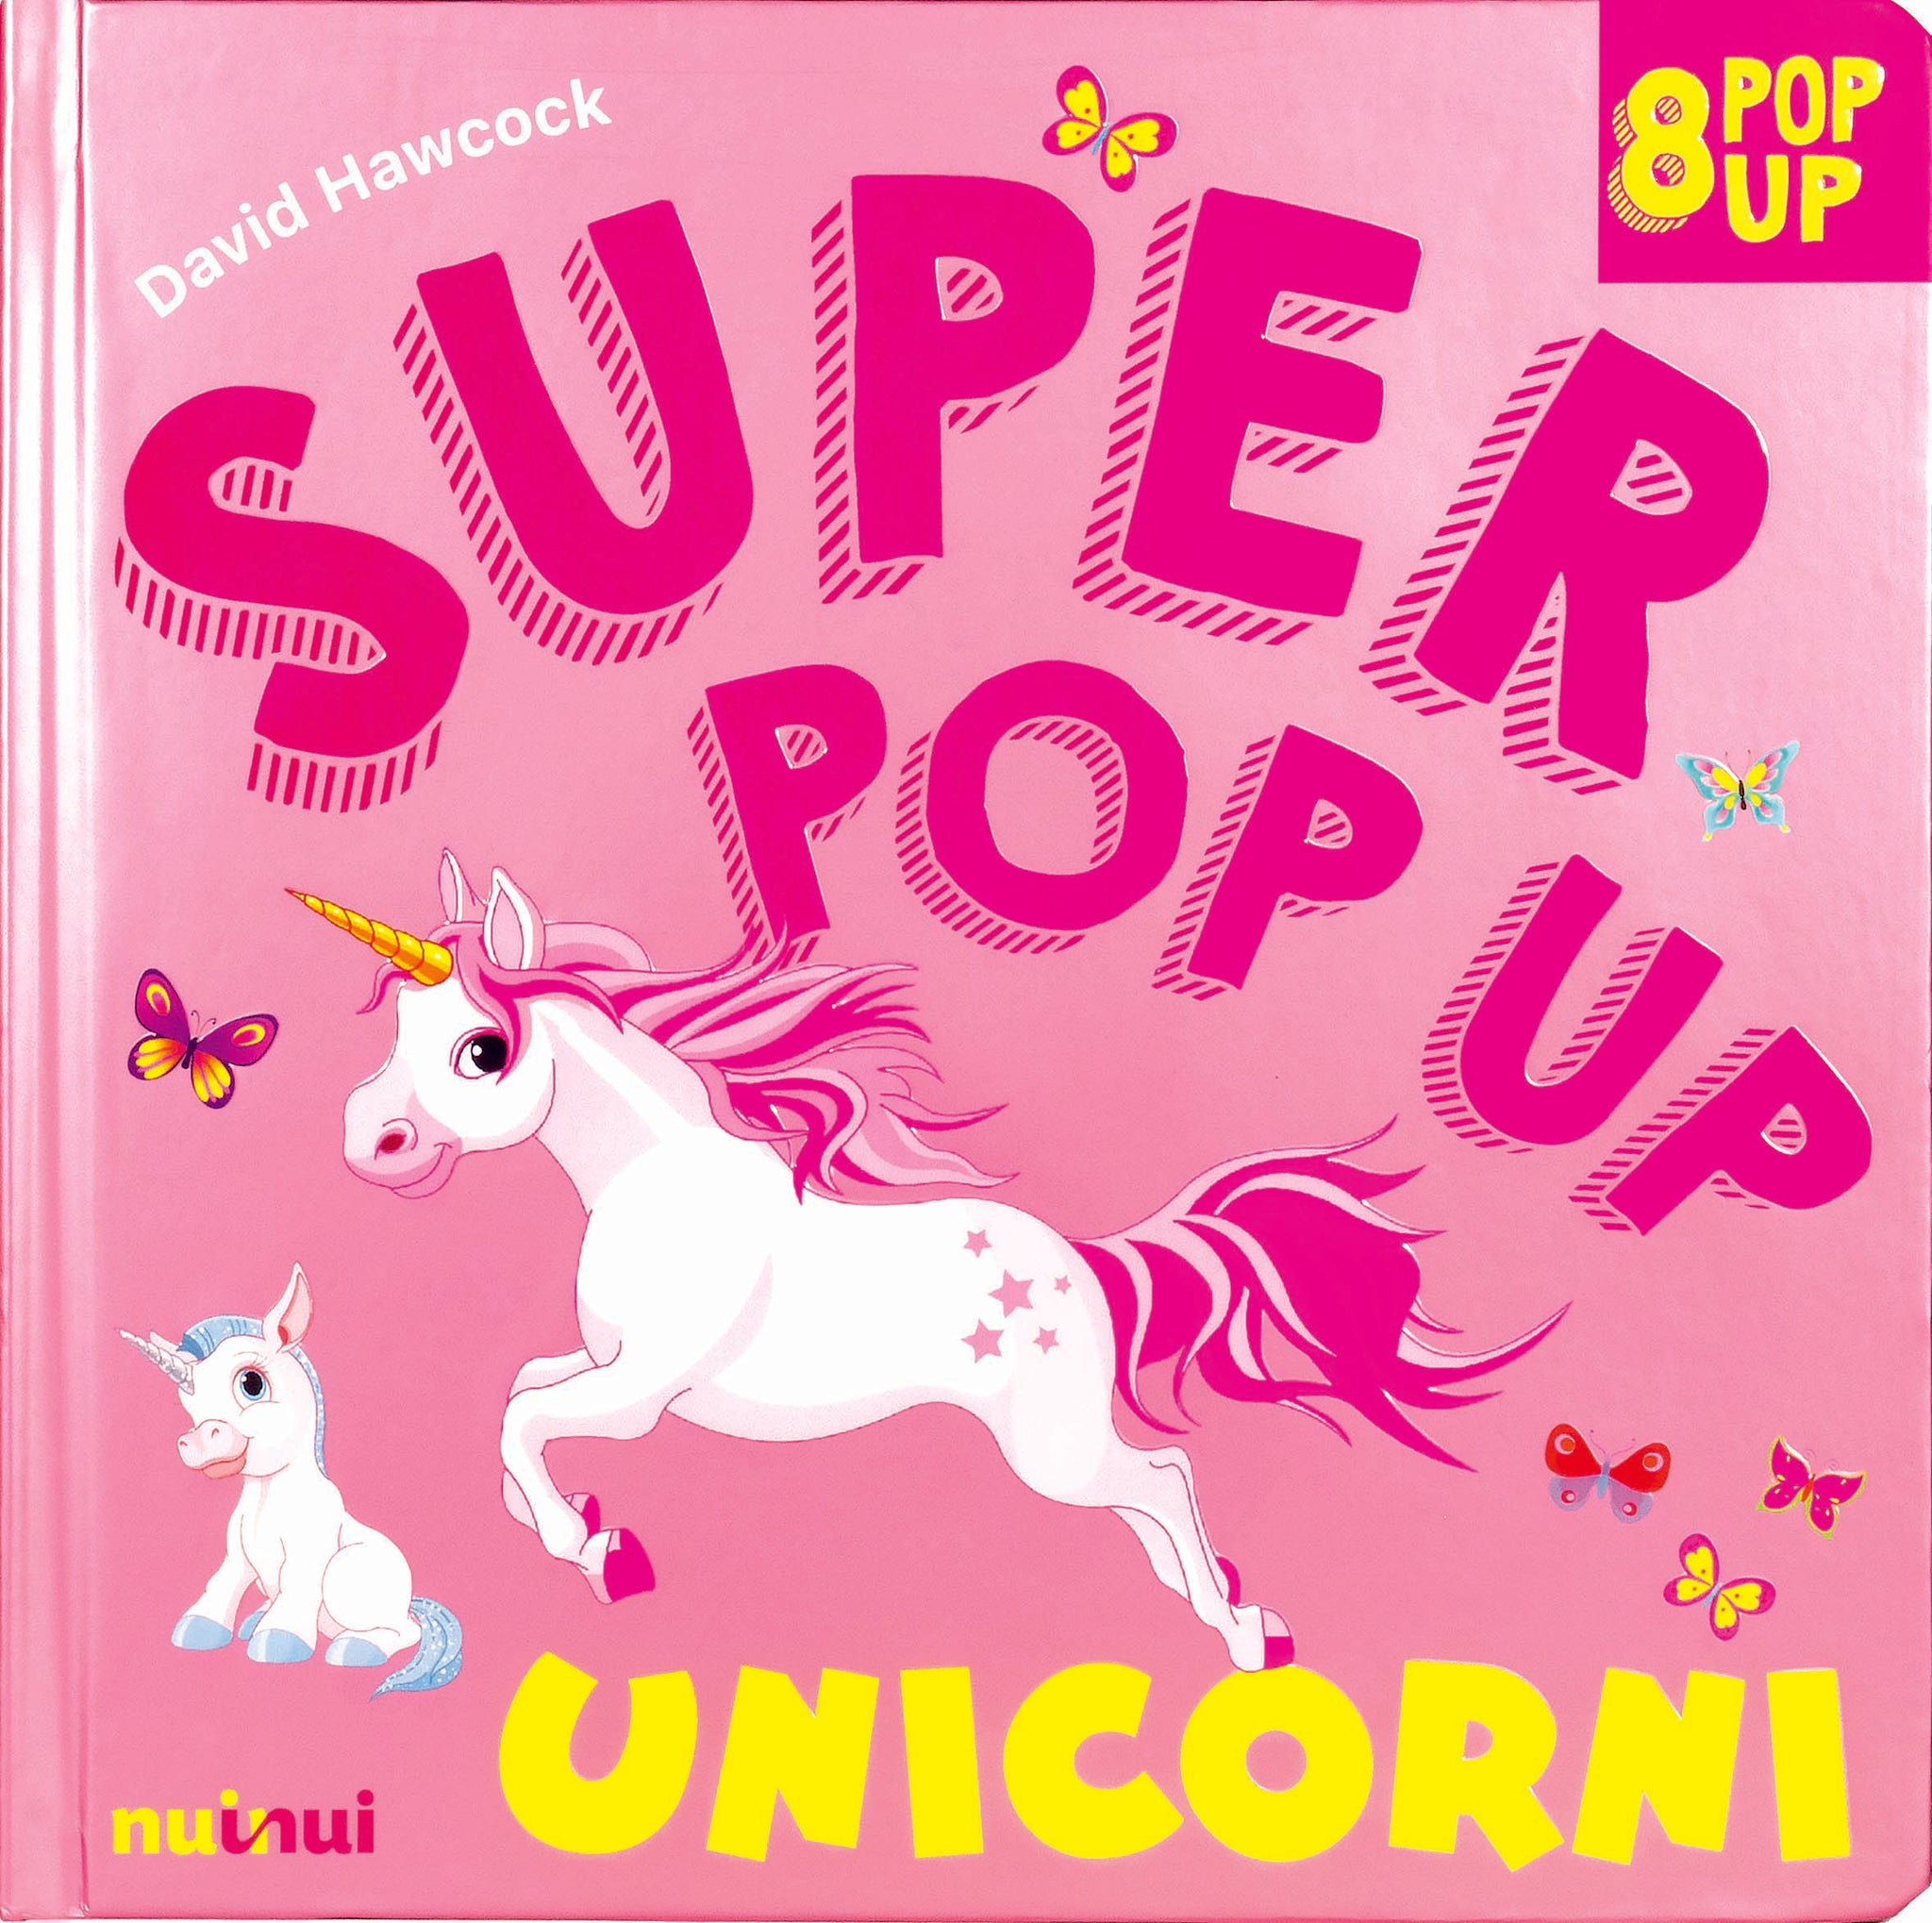 Super pop up - Unicorns